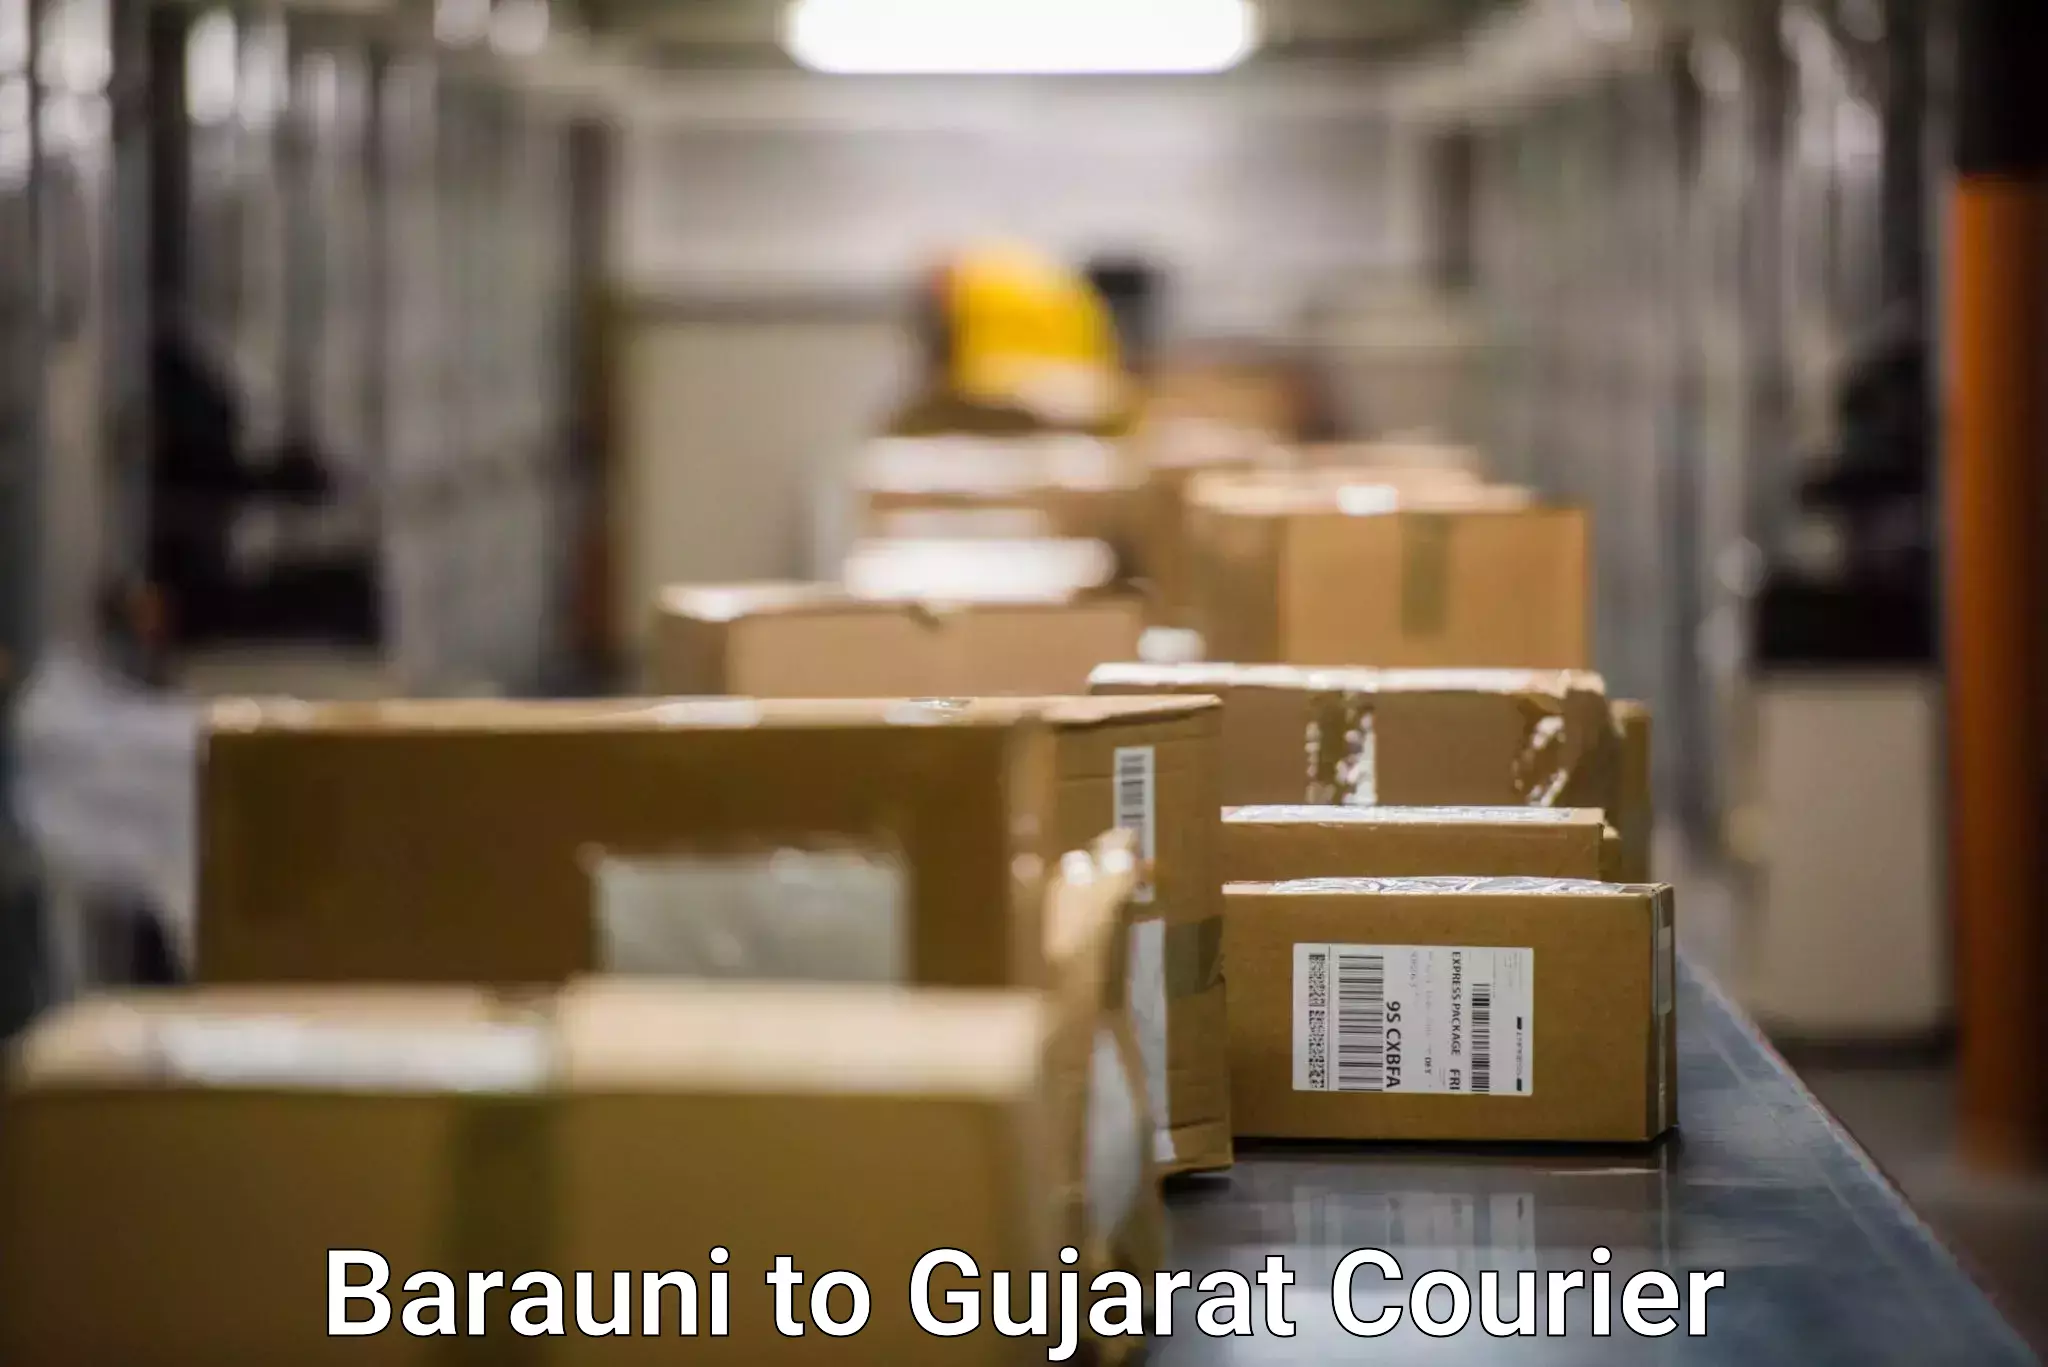 Fast delivery service Barauni to Gandhinagar